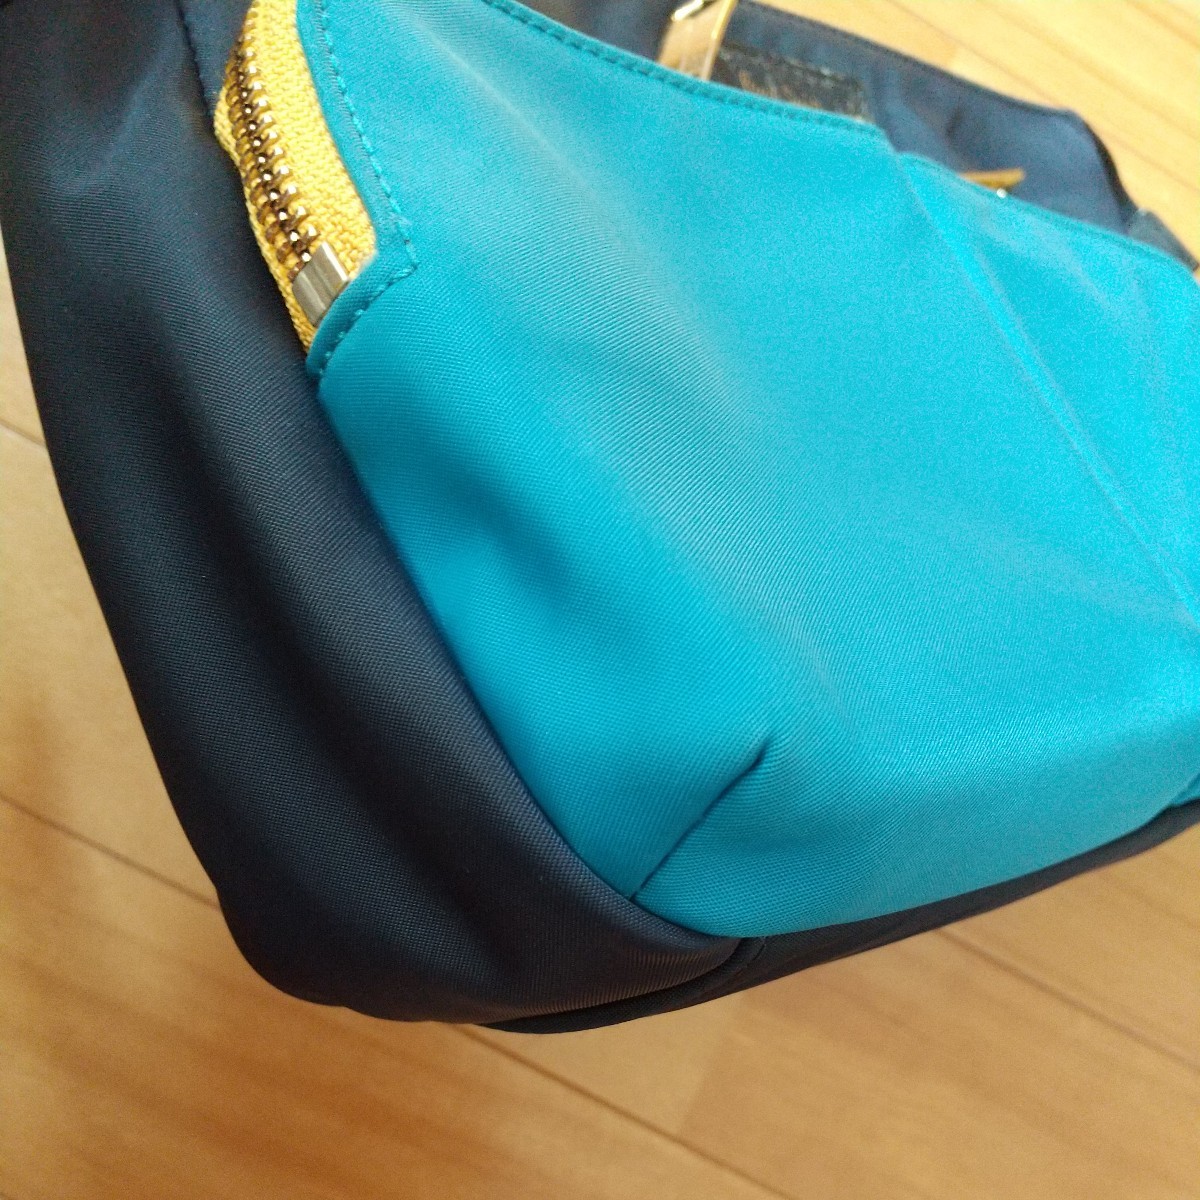  Paul Smith lady's shoulder bag nylon color navy blue color 